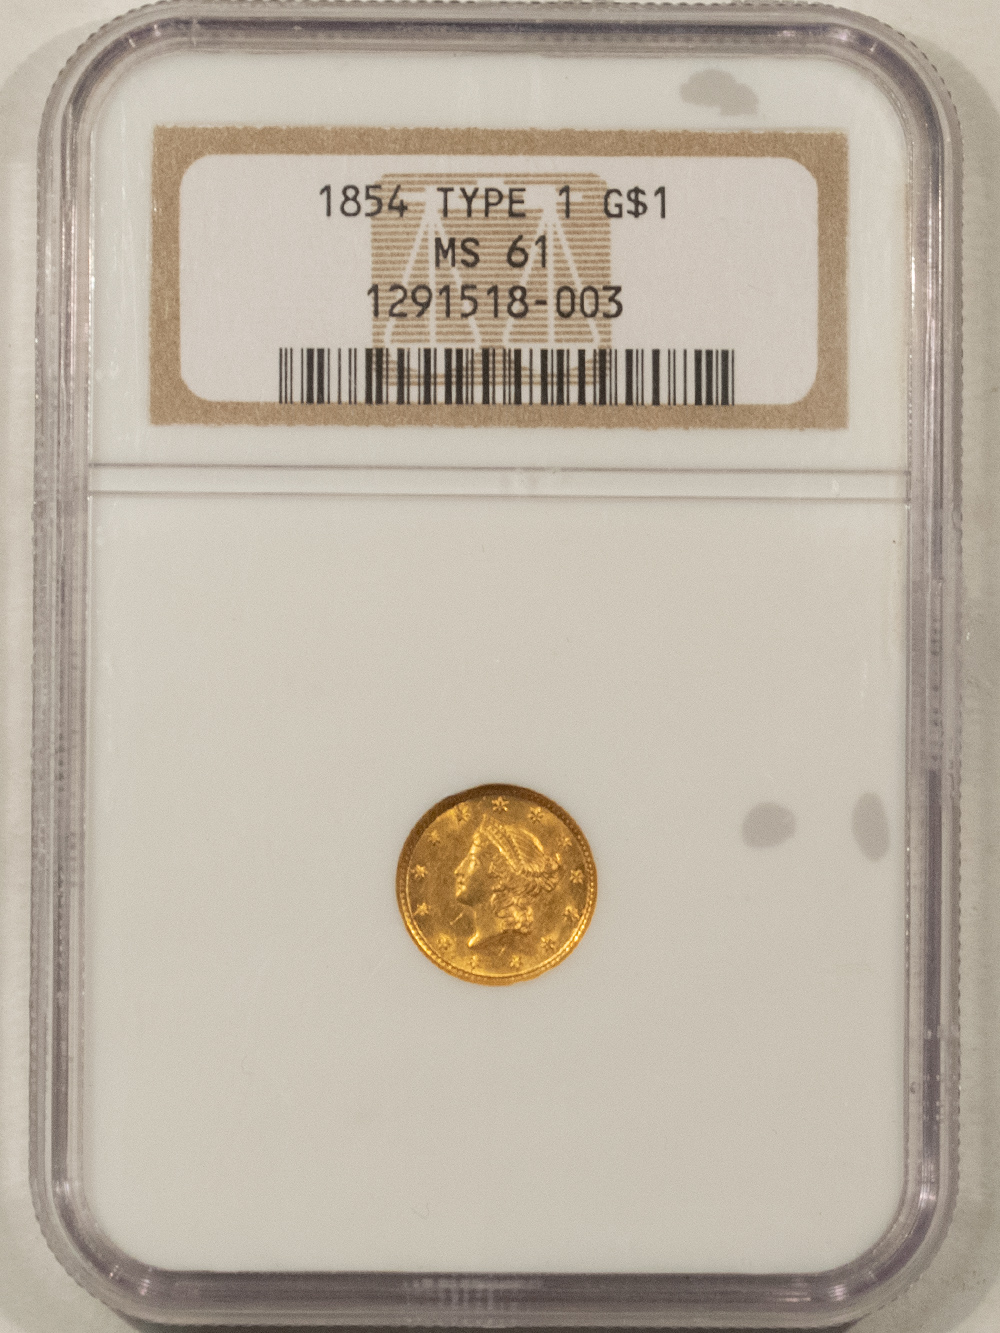 1854 TYPE I $1 GOLD DOLLAR - NGC MS-61, FLASHY